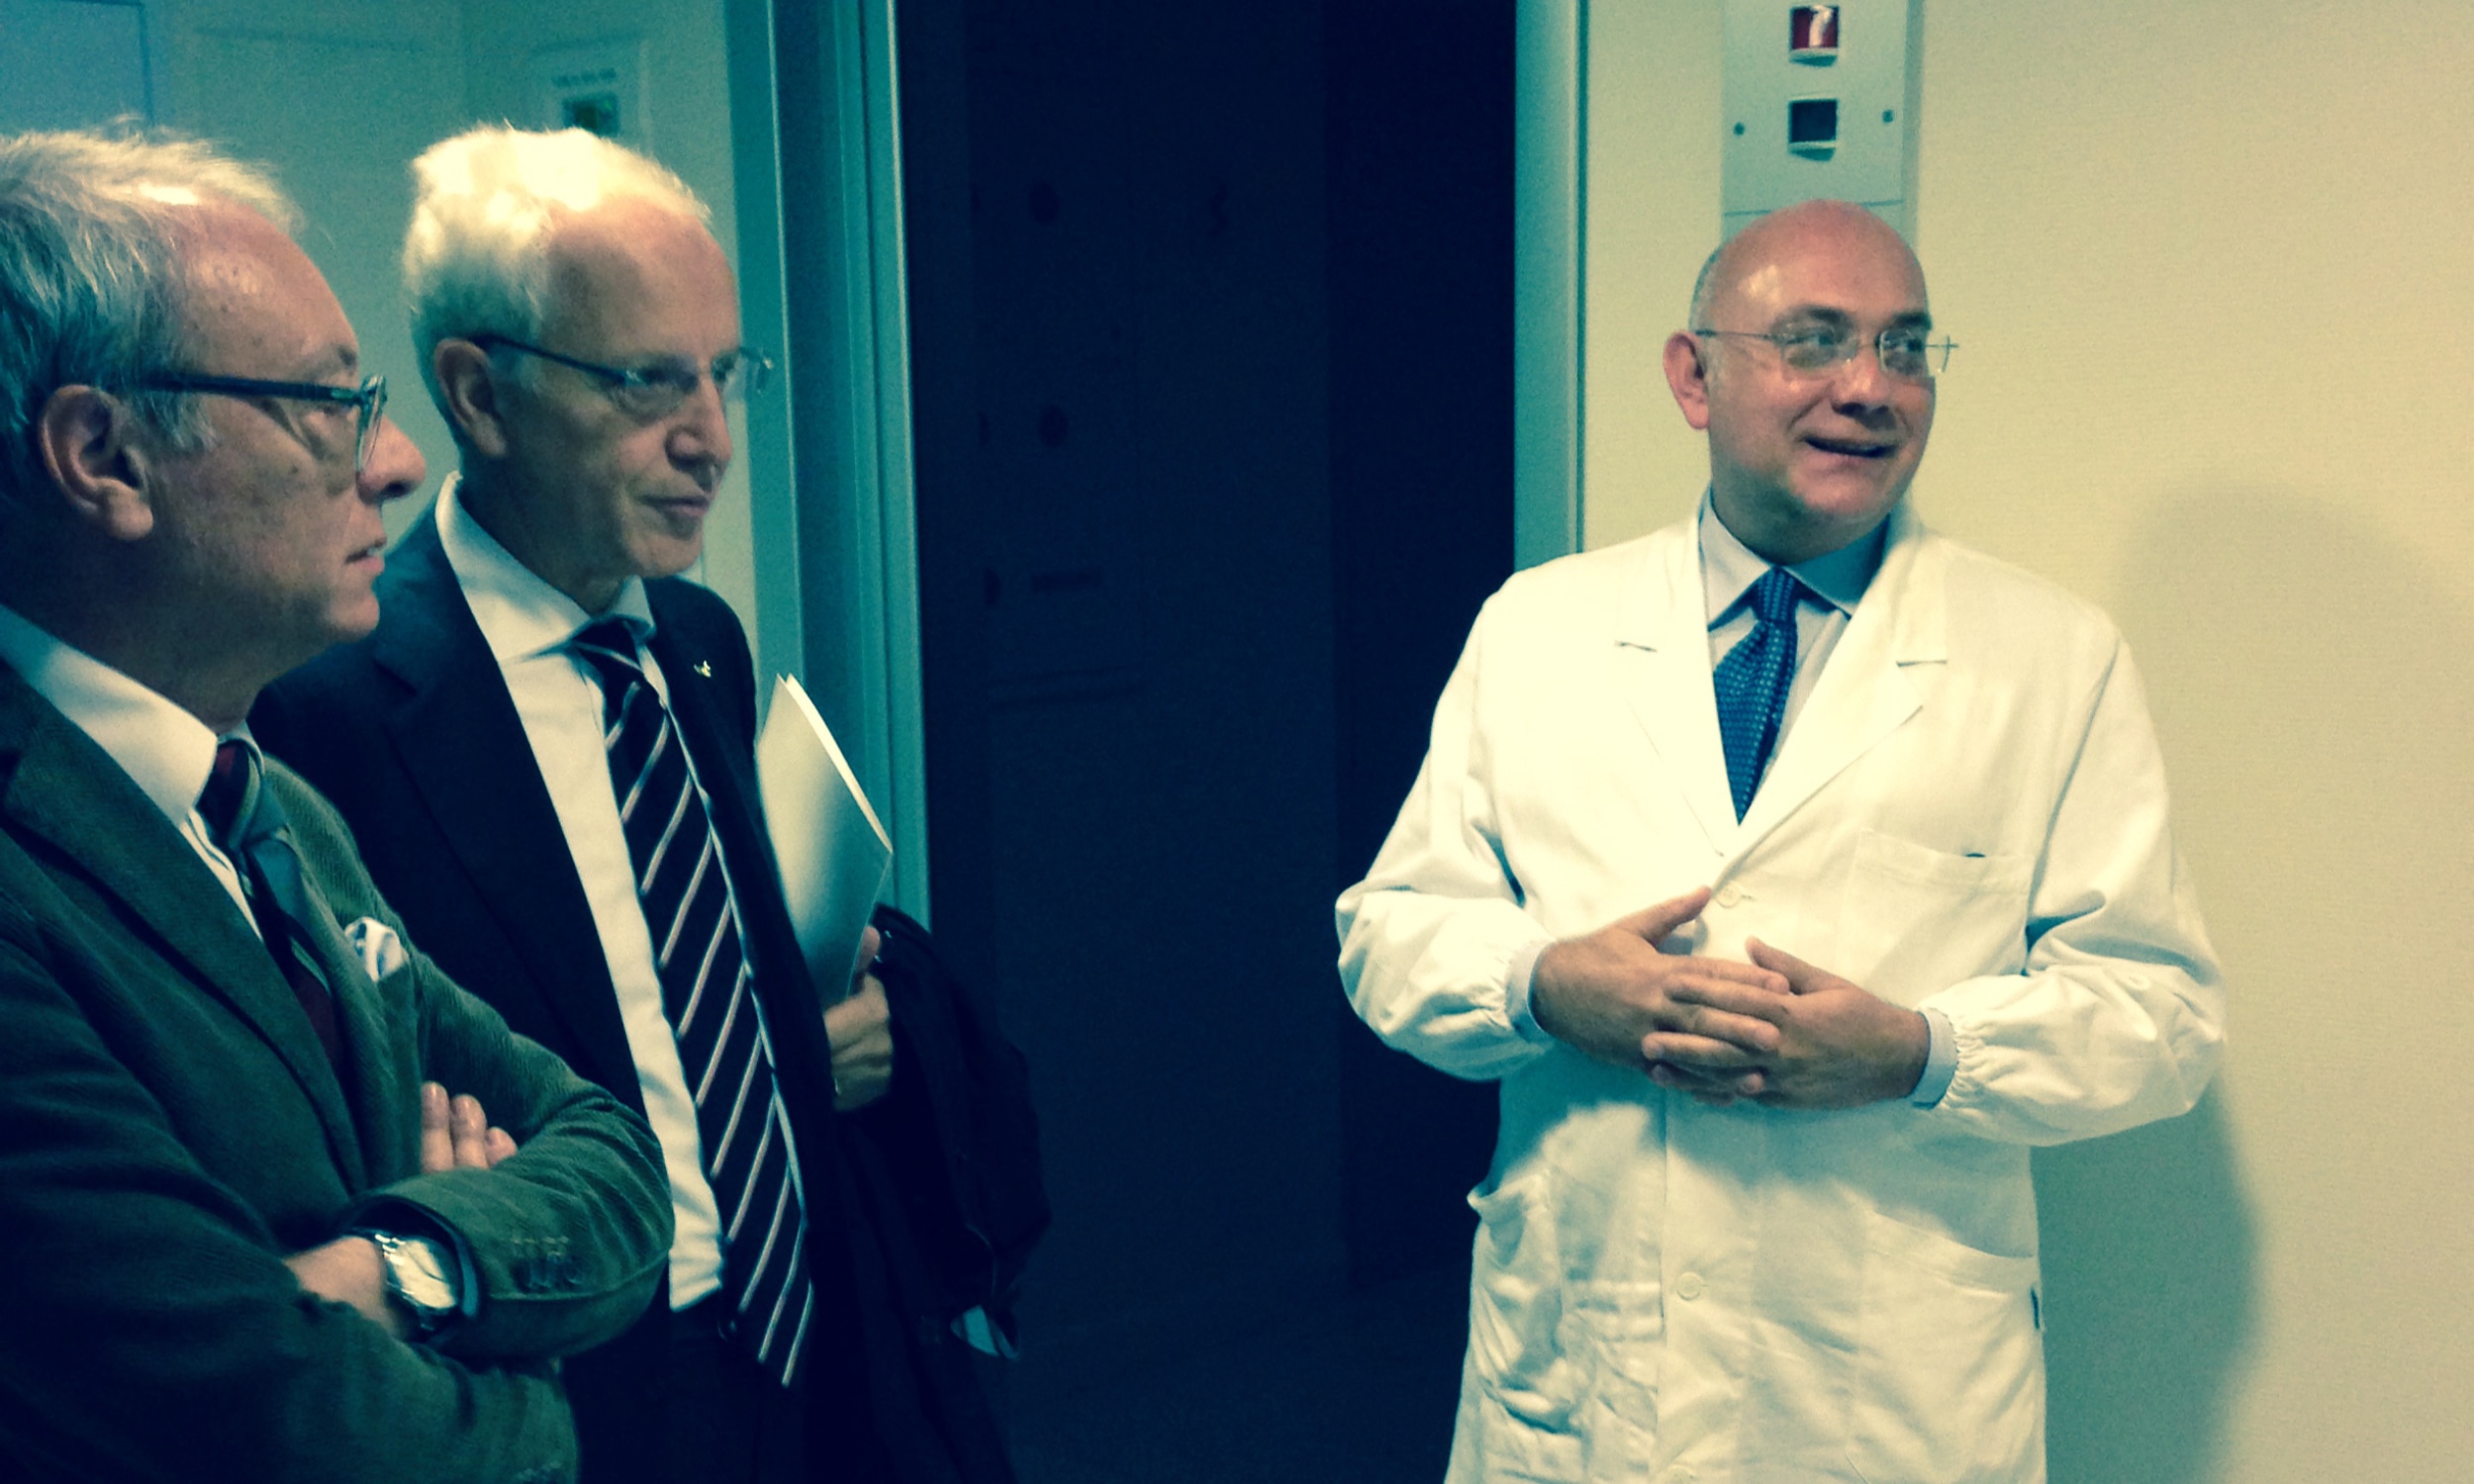 Il Vicepresidente di Banca Mediolanum visita la sede della Toscana Medical Supports